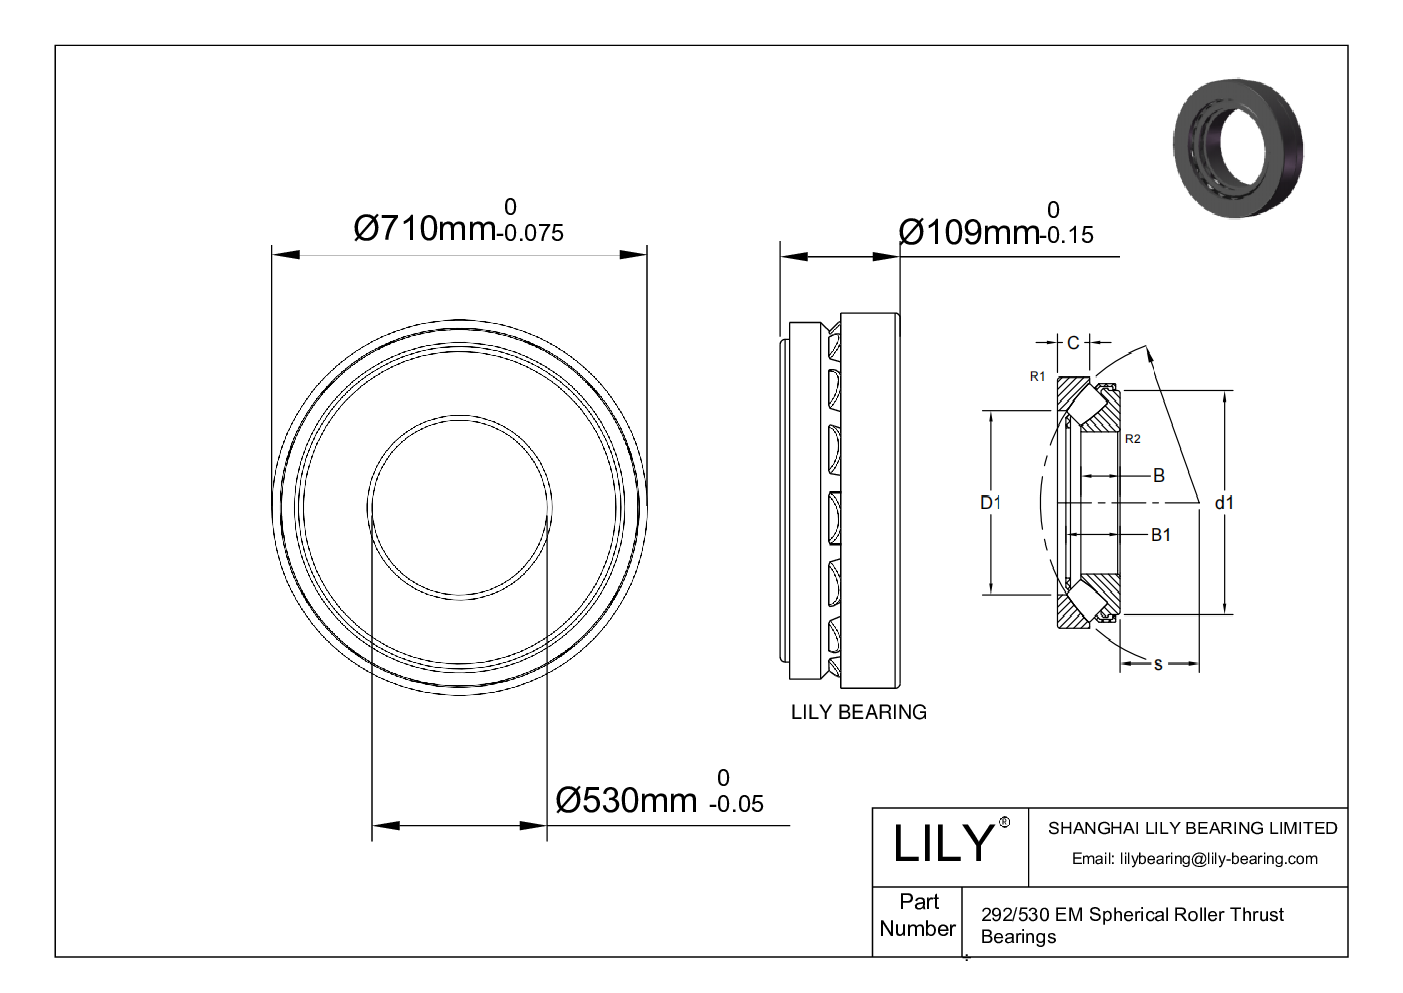 292/530 EM Spherical Roller Thrust Bearings cad drawing